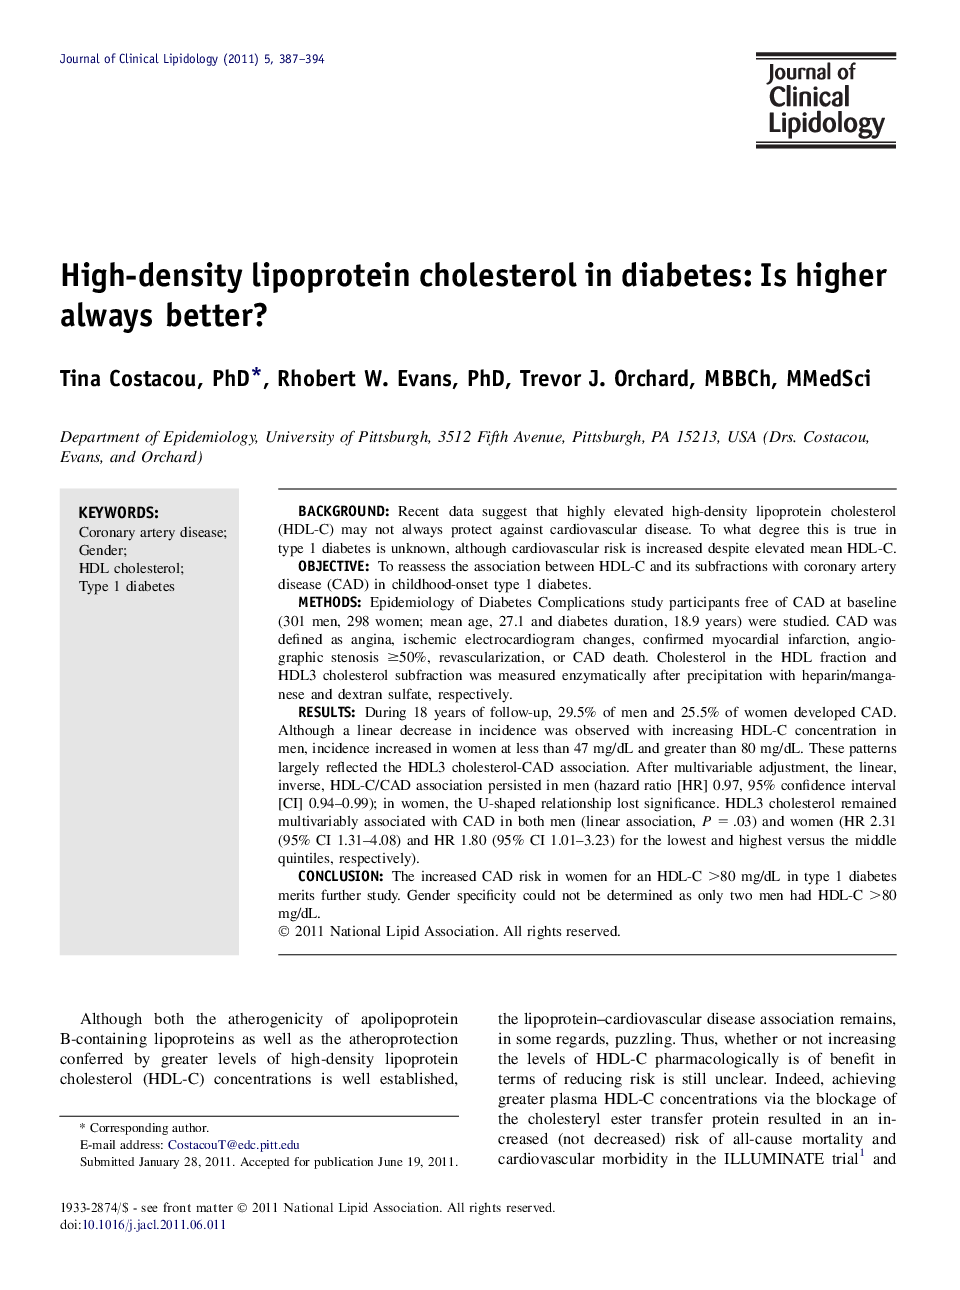 High-density lipoprotein cholesterol in diabetes: Is higher always better?